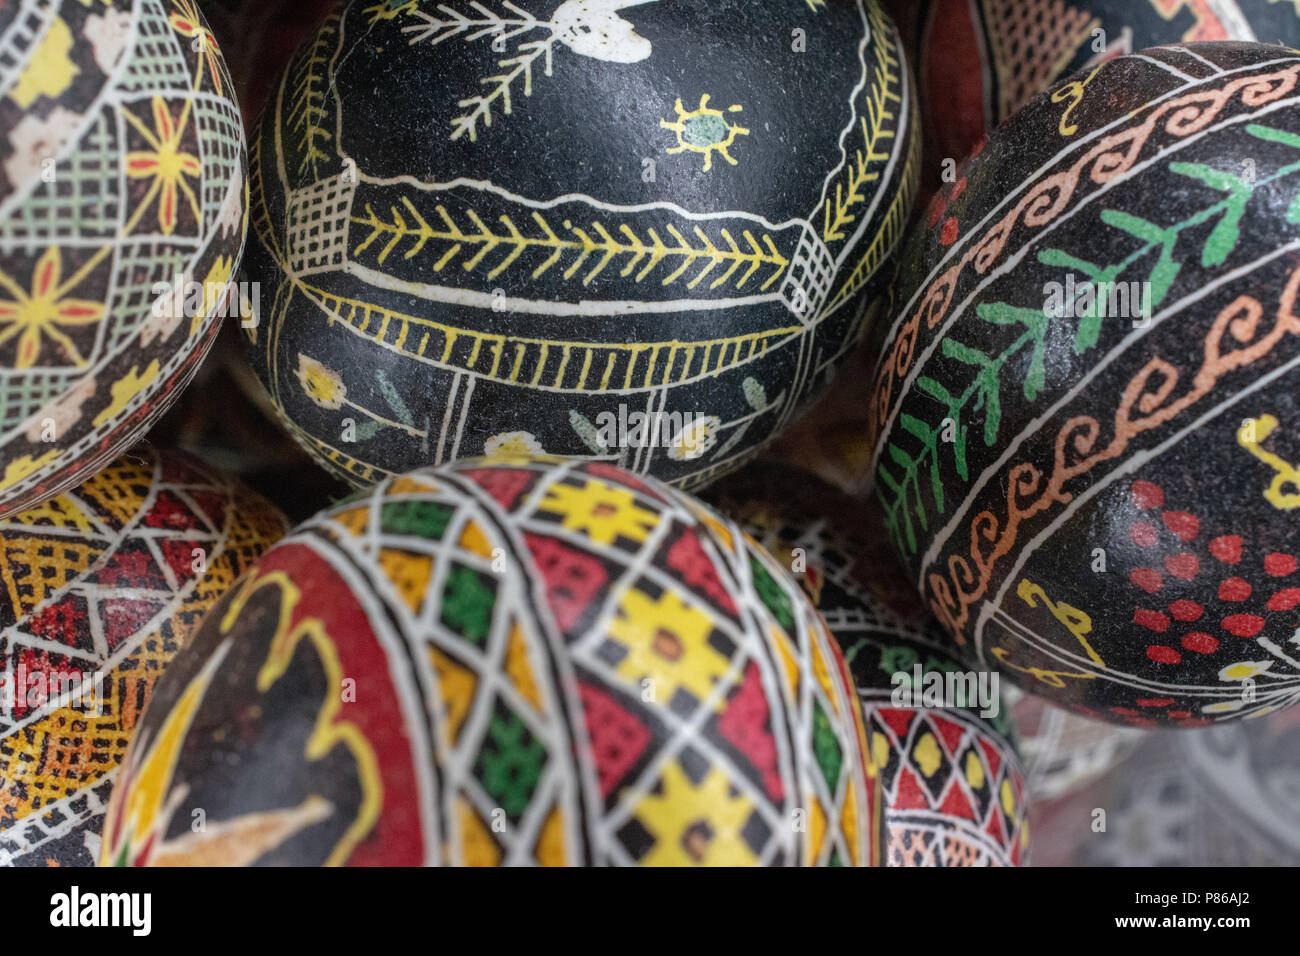 Pysanka is a Ukrainian Easter Egg decorated with traditional Ukrainian folk designs using a wax-resist method. Stock Photo